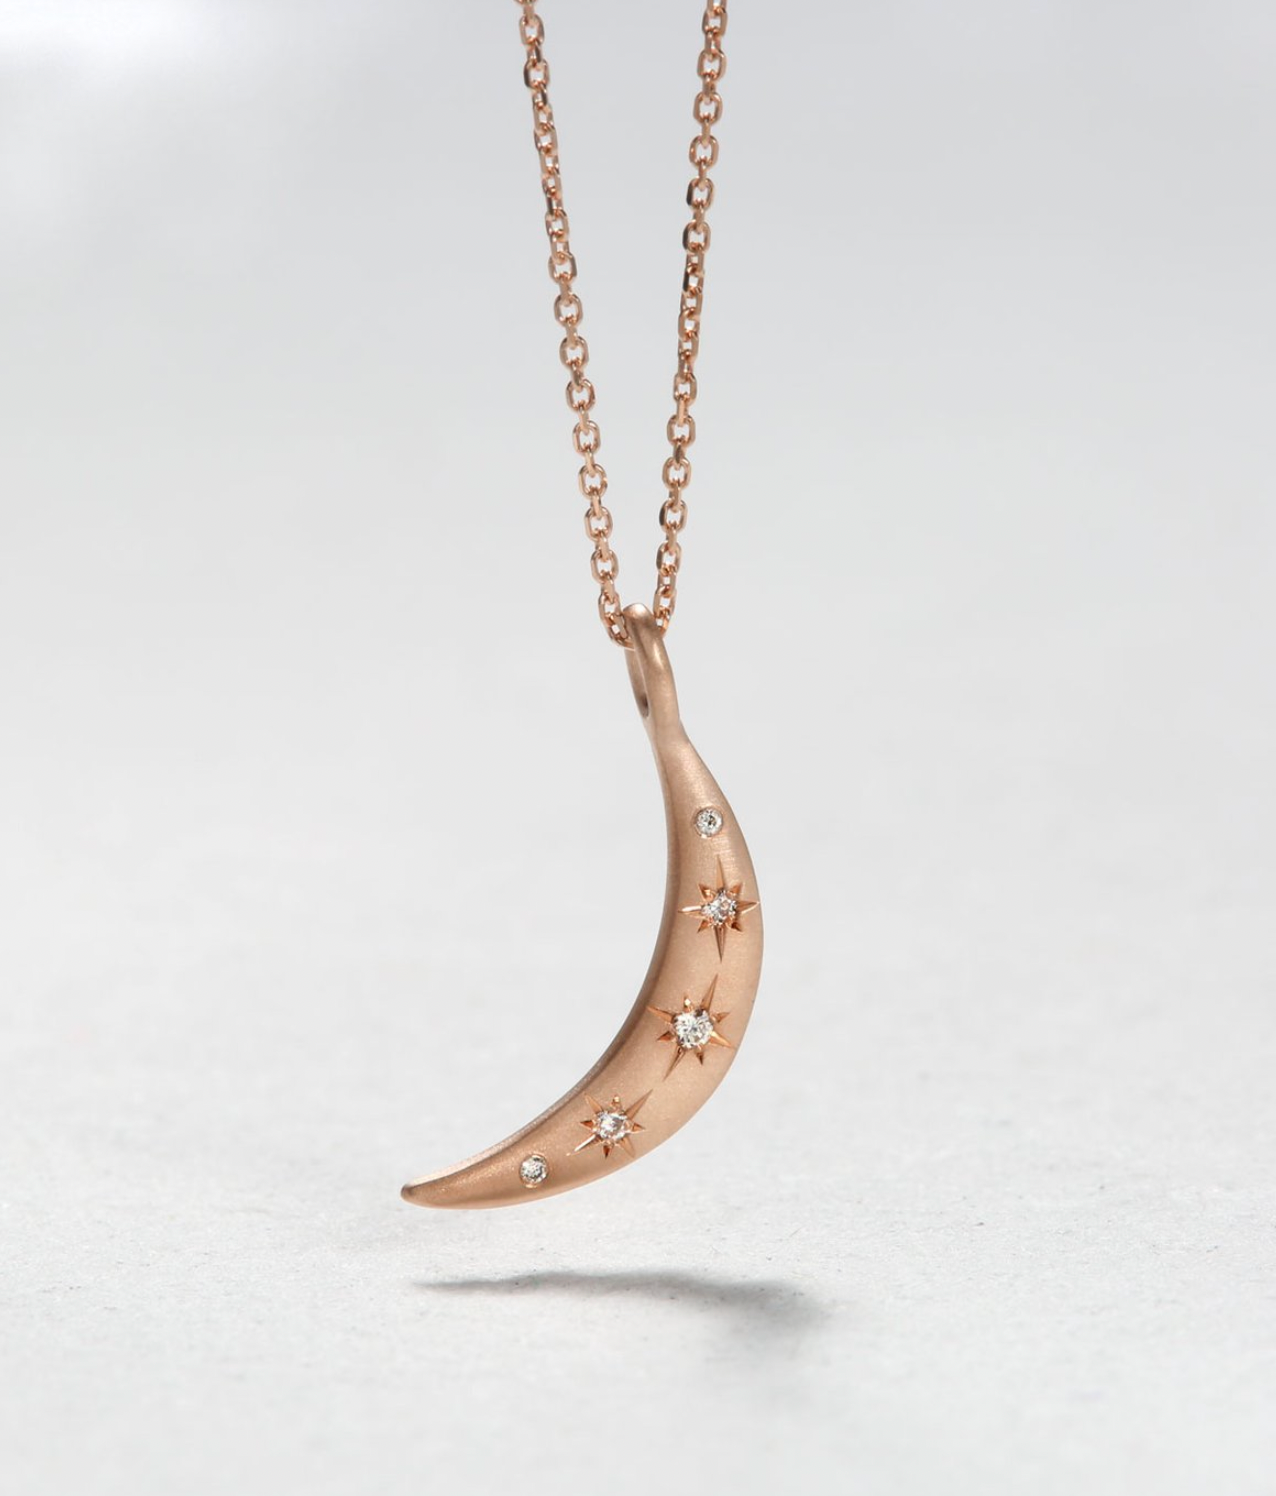 moon & stars necklace